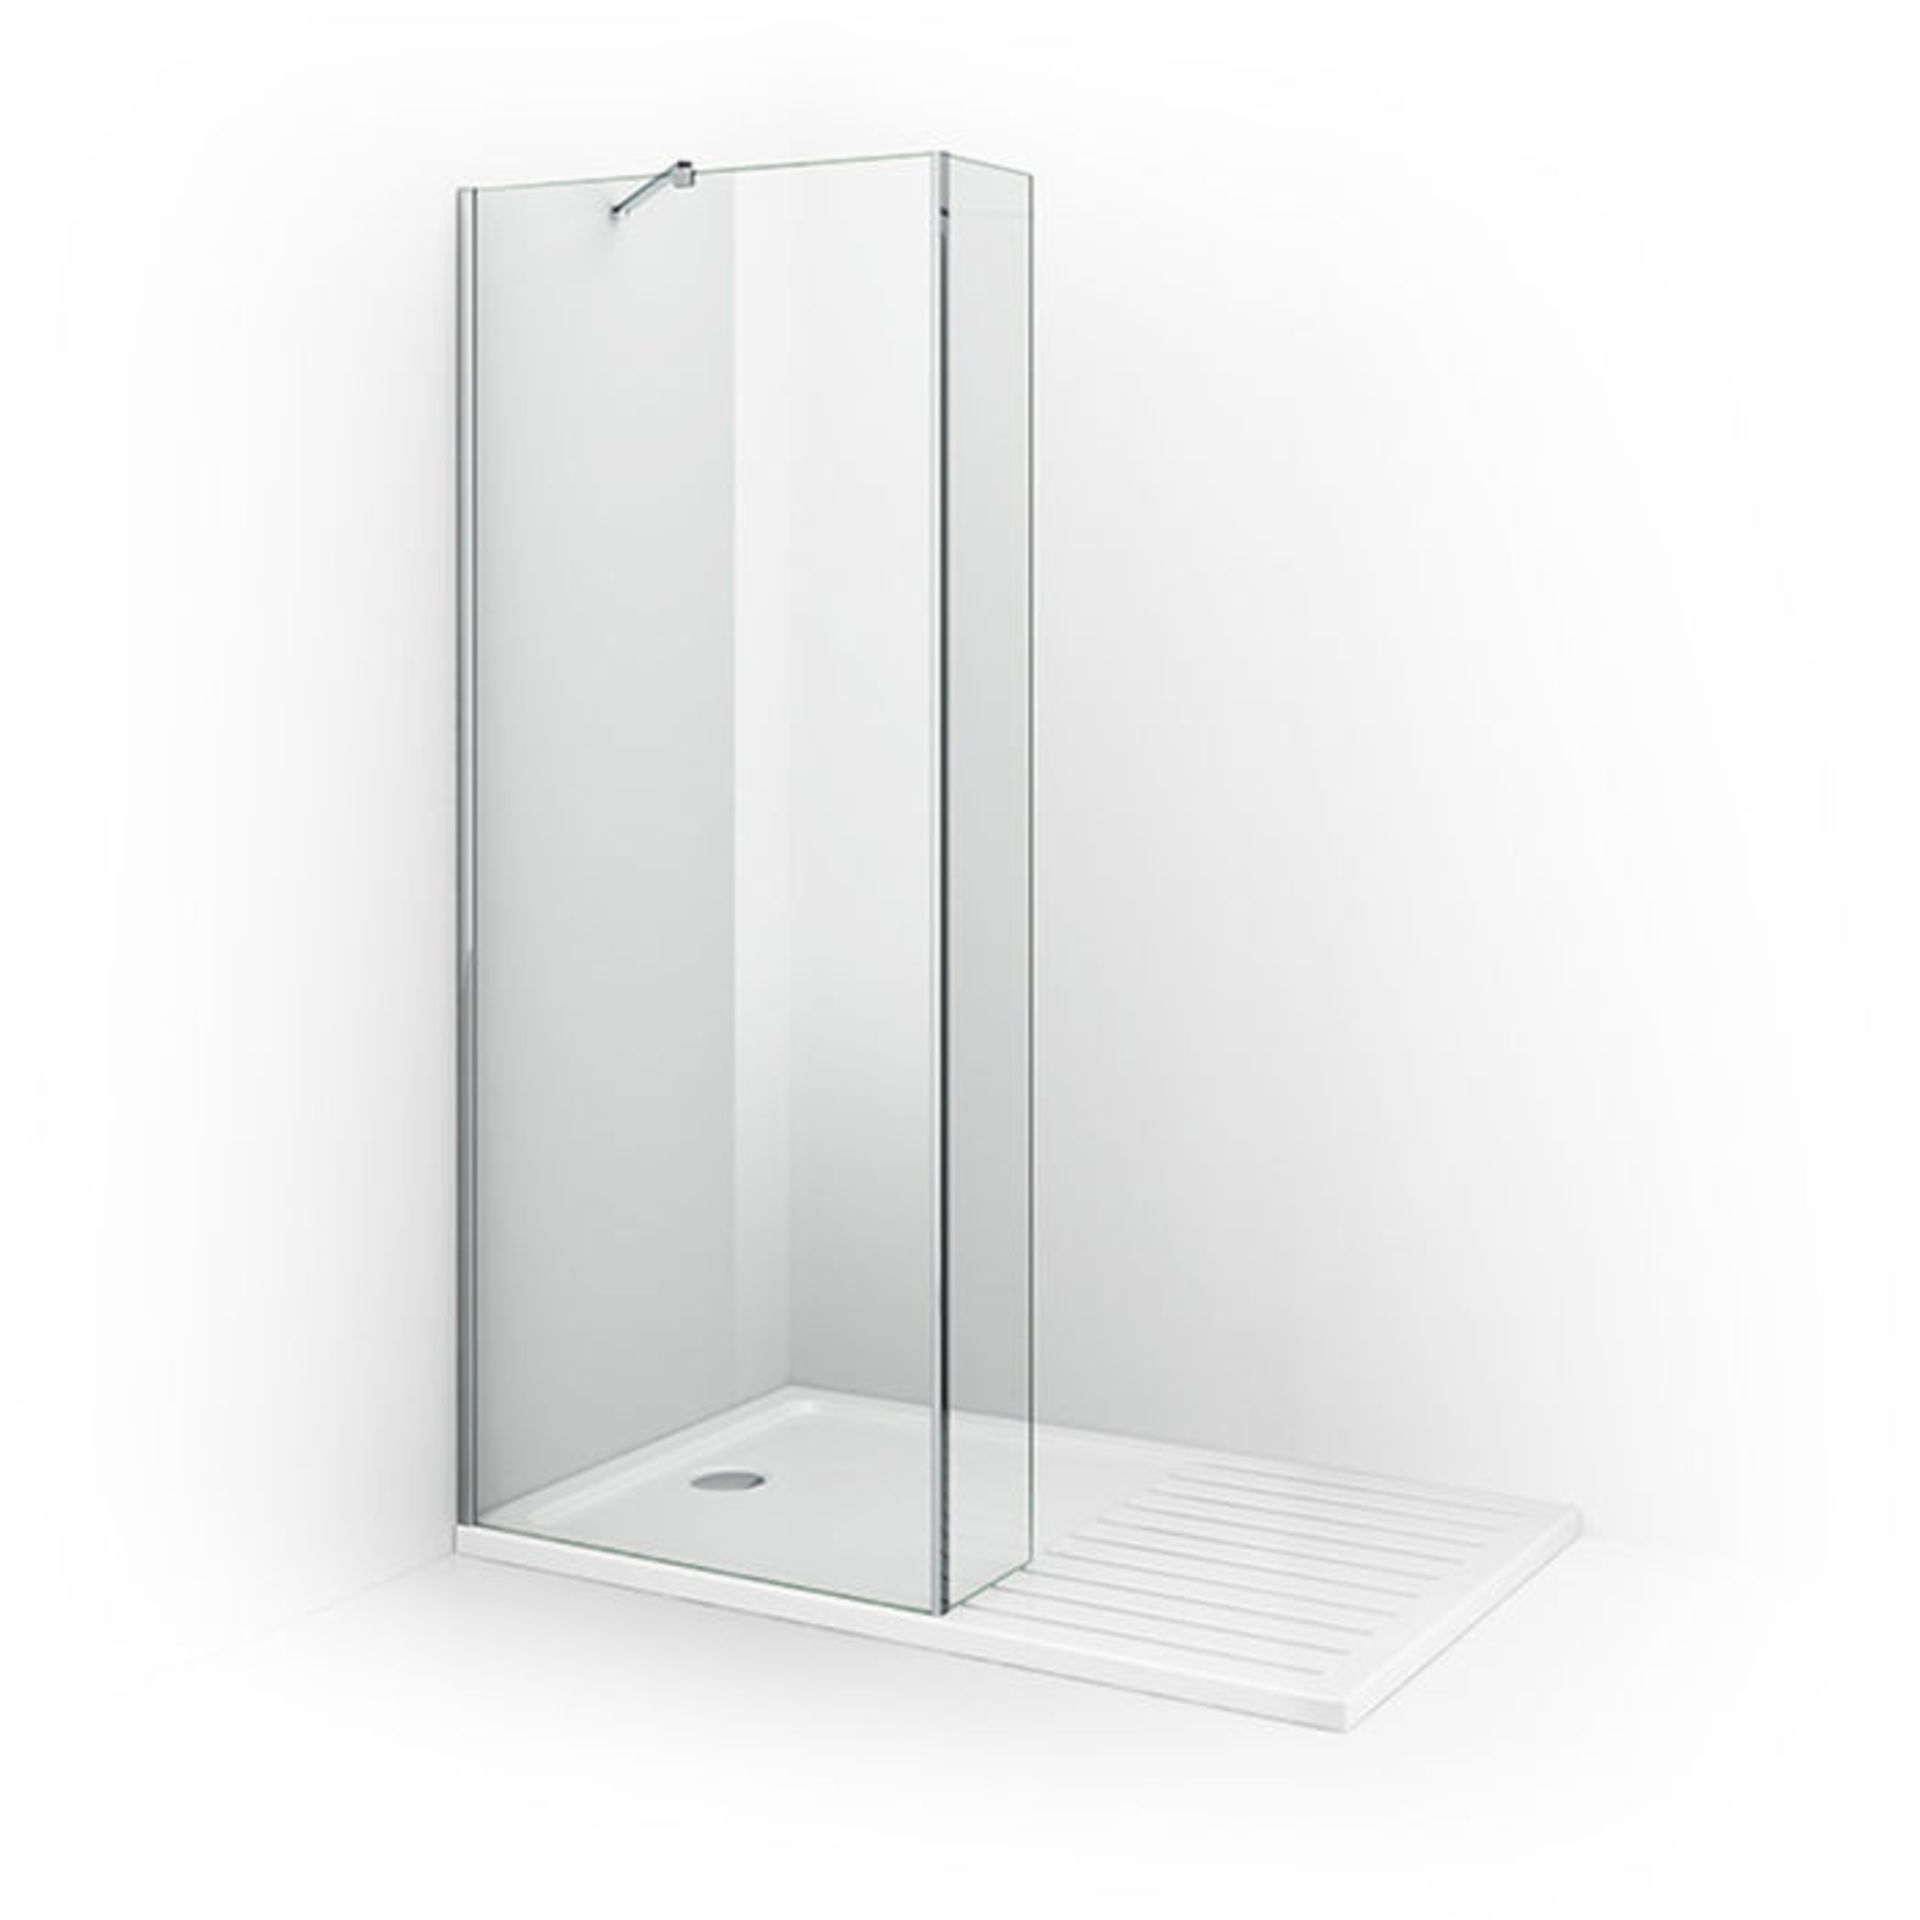 (LP48) 1400x800mm Rectangular Walk In Shower Tray. Strong & Slimline low profile design - - Image 3 of 3